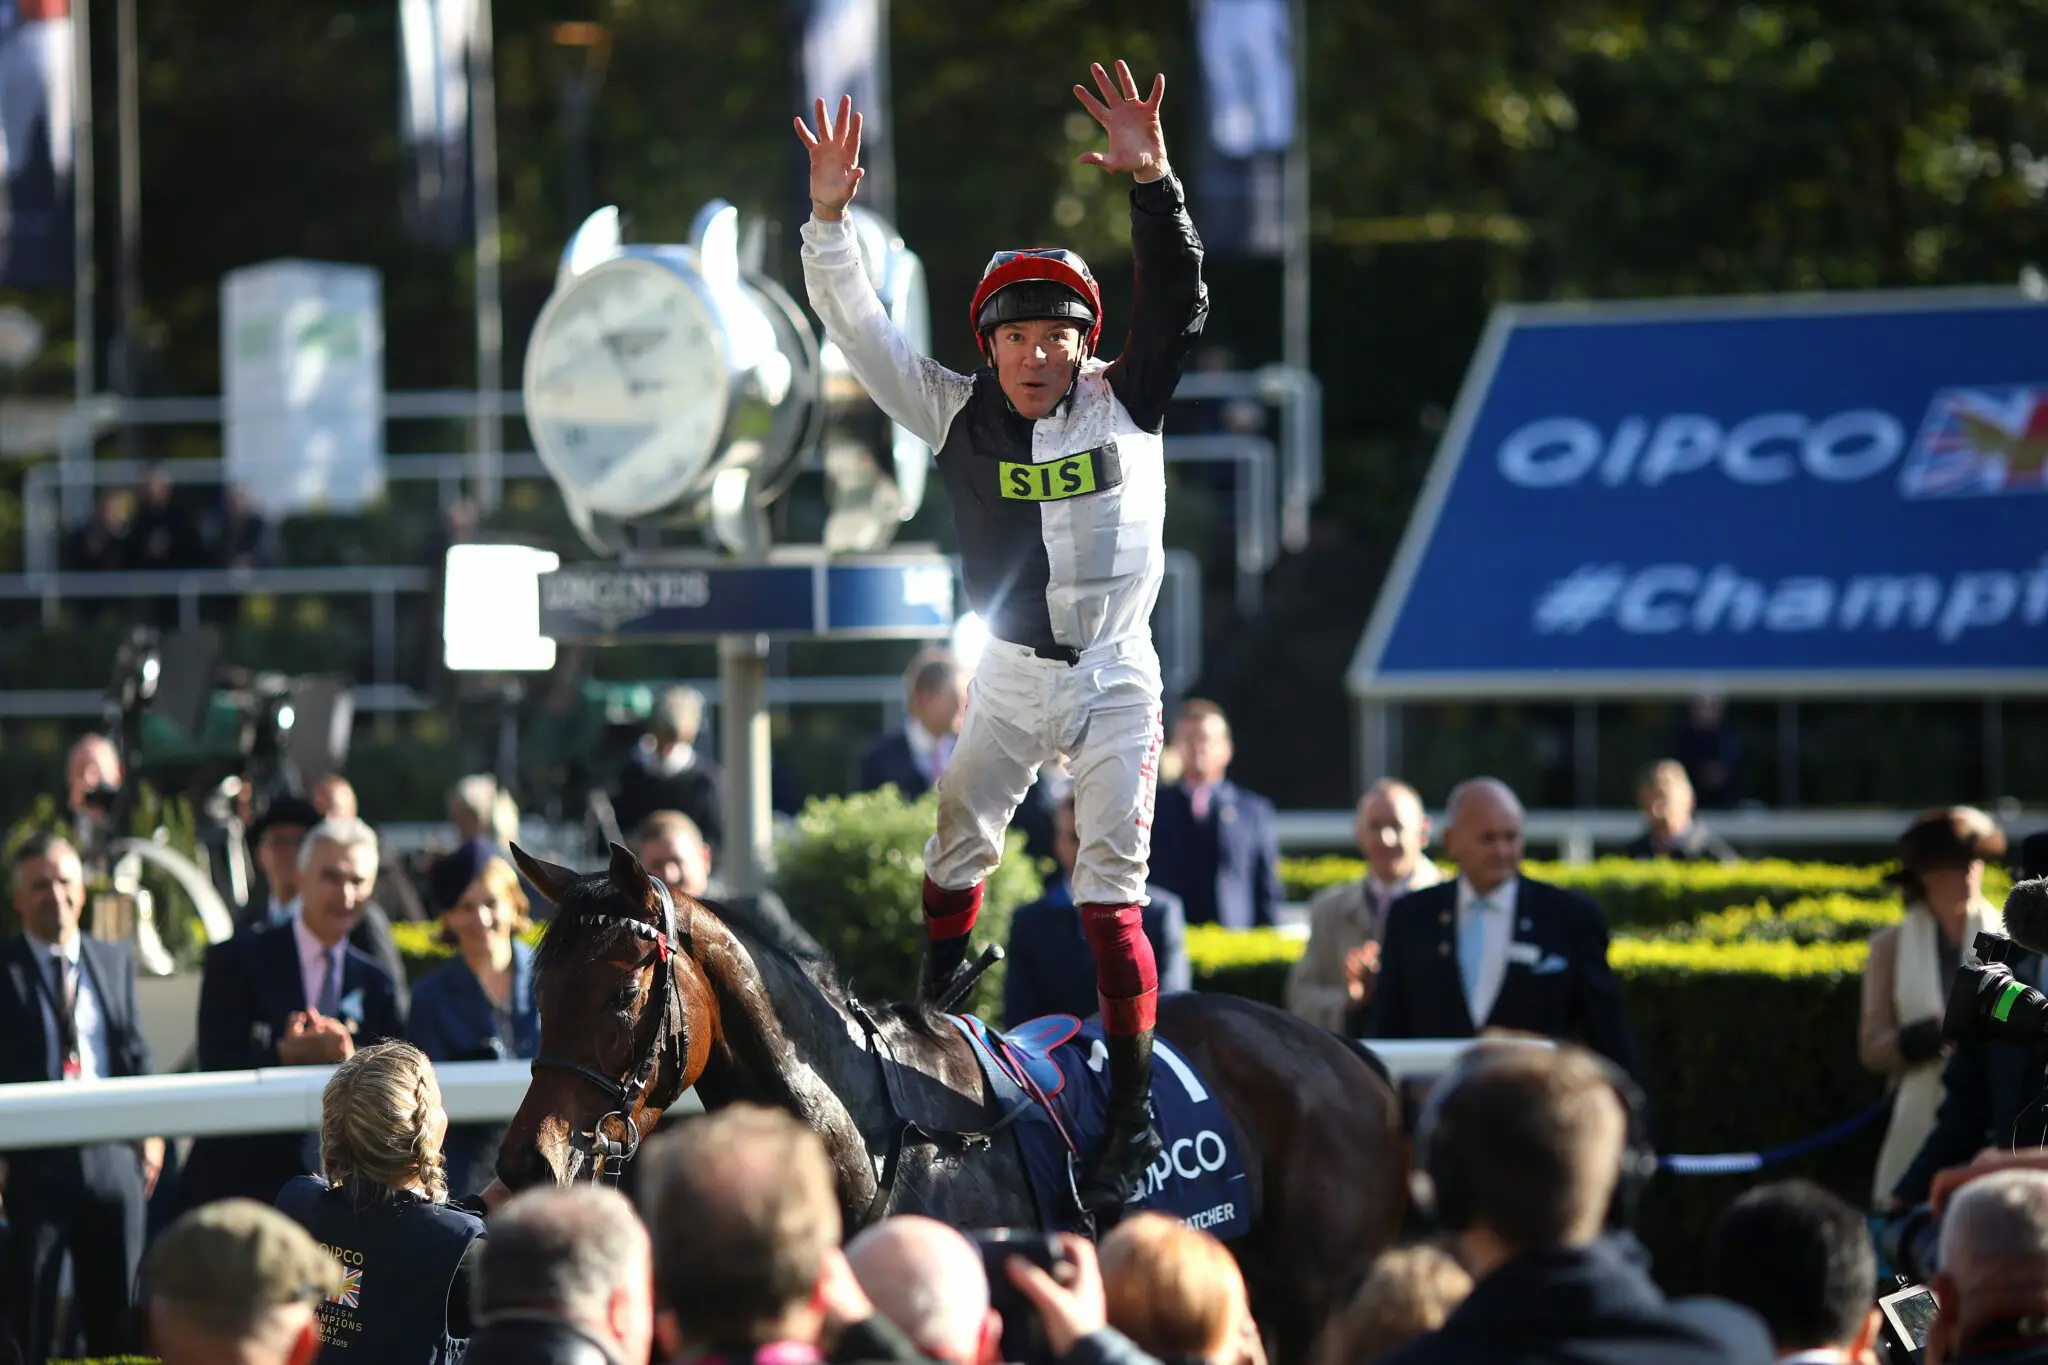 Image of a jockey cheering on top of horse at Ascot